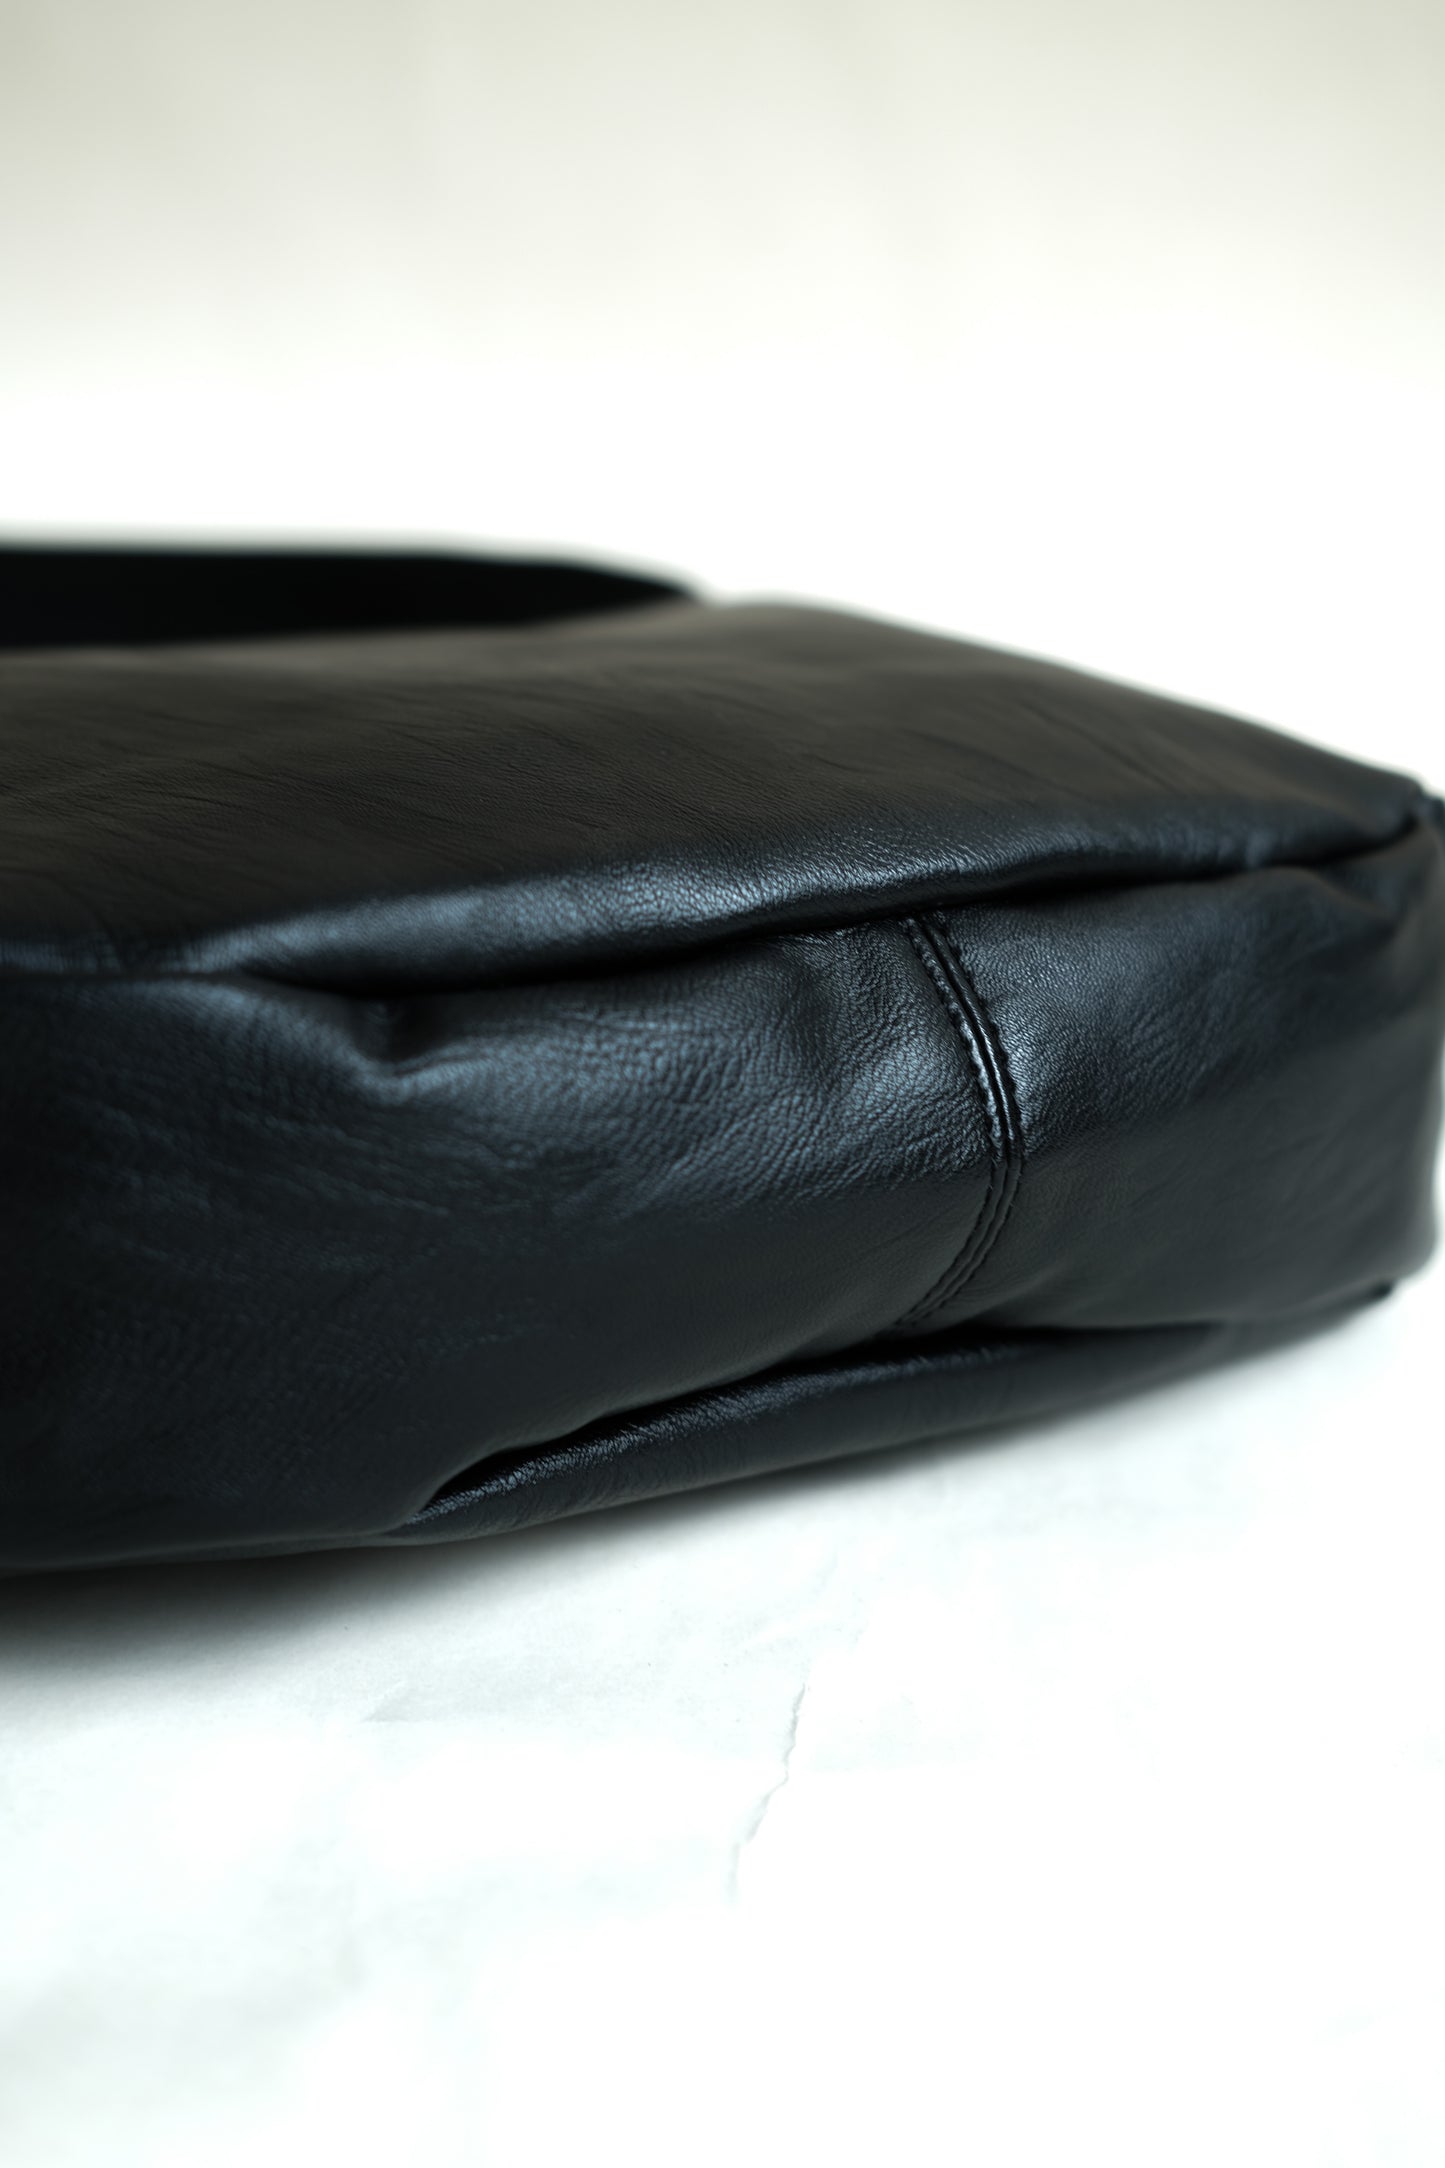 Premium soft leather shoulder bag in classic black